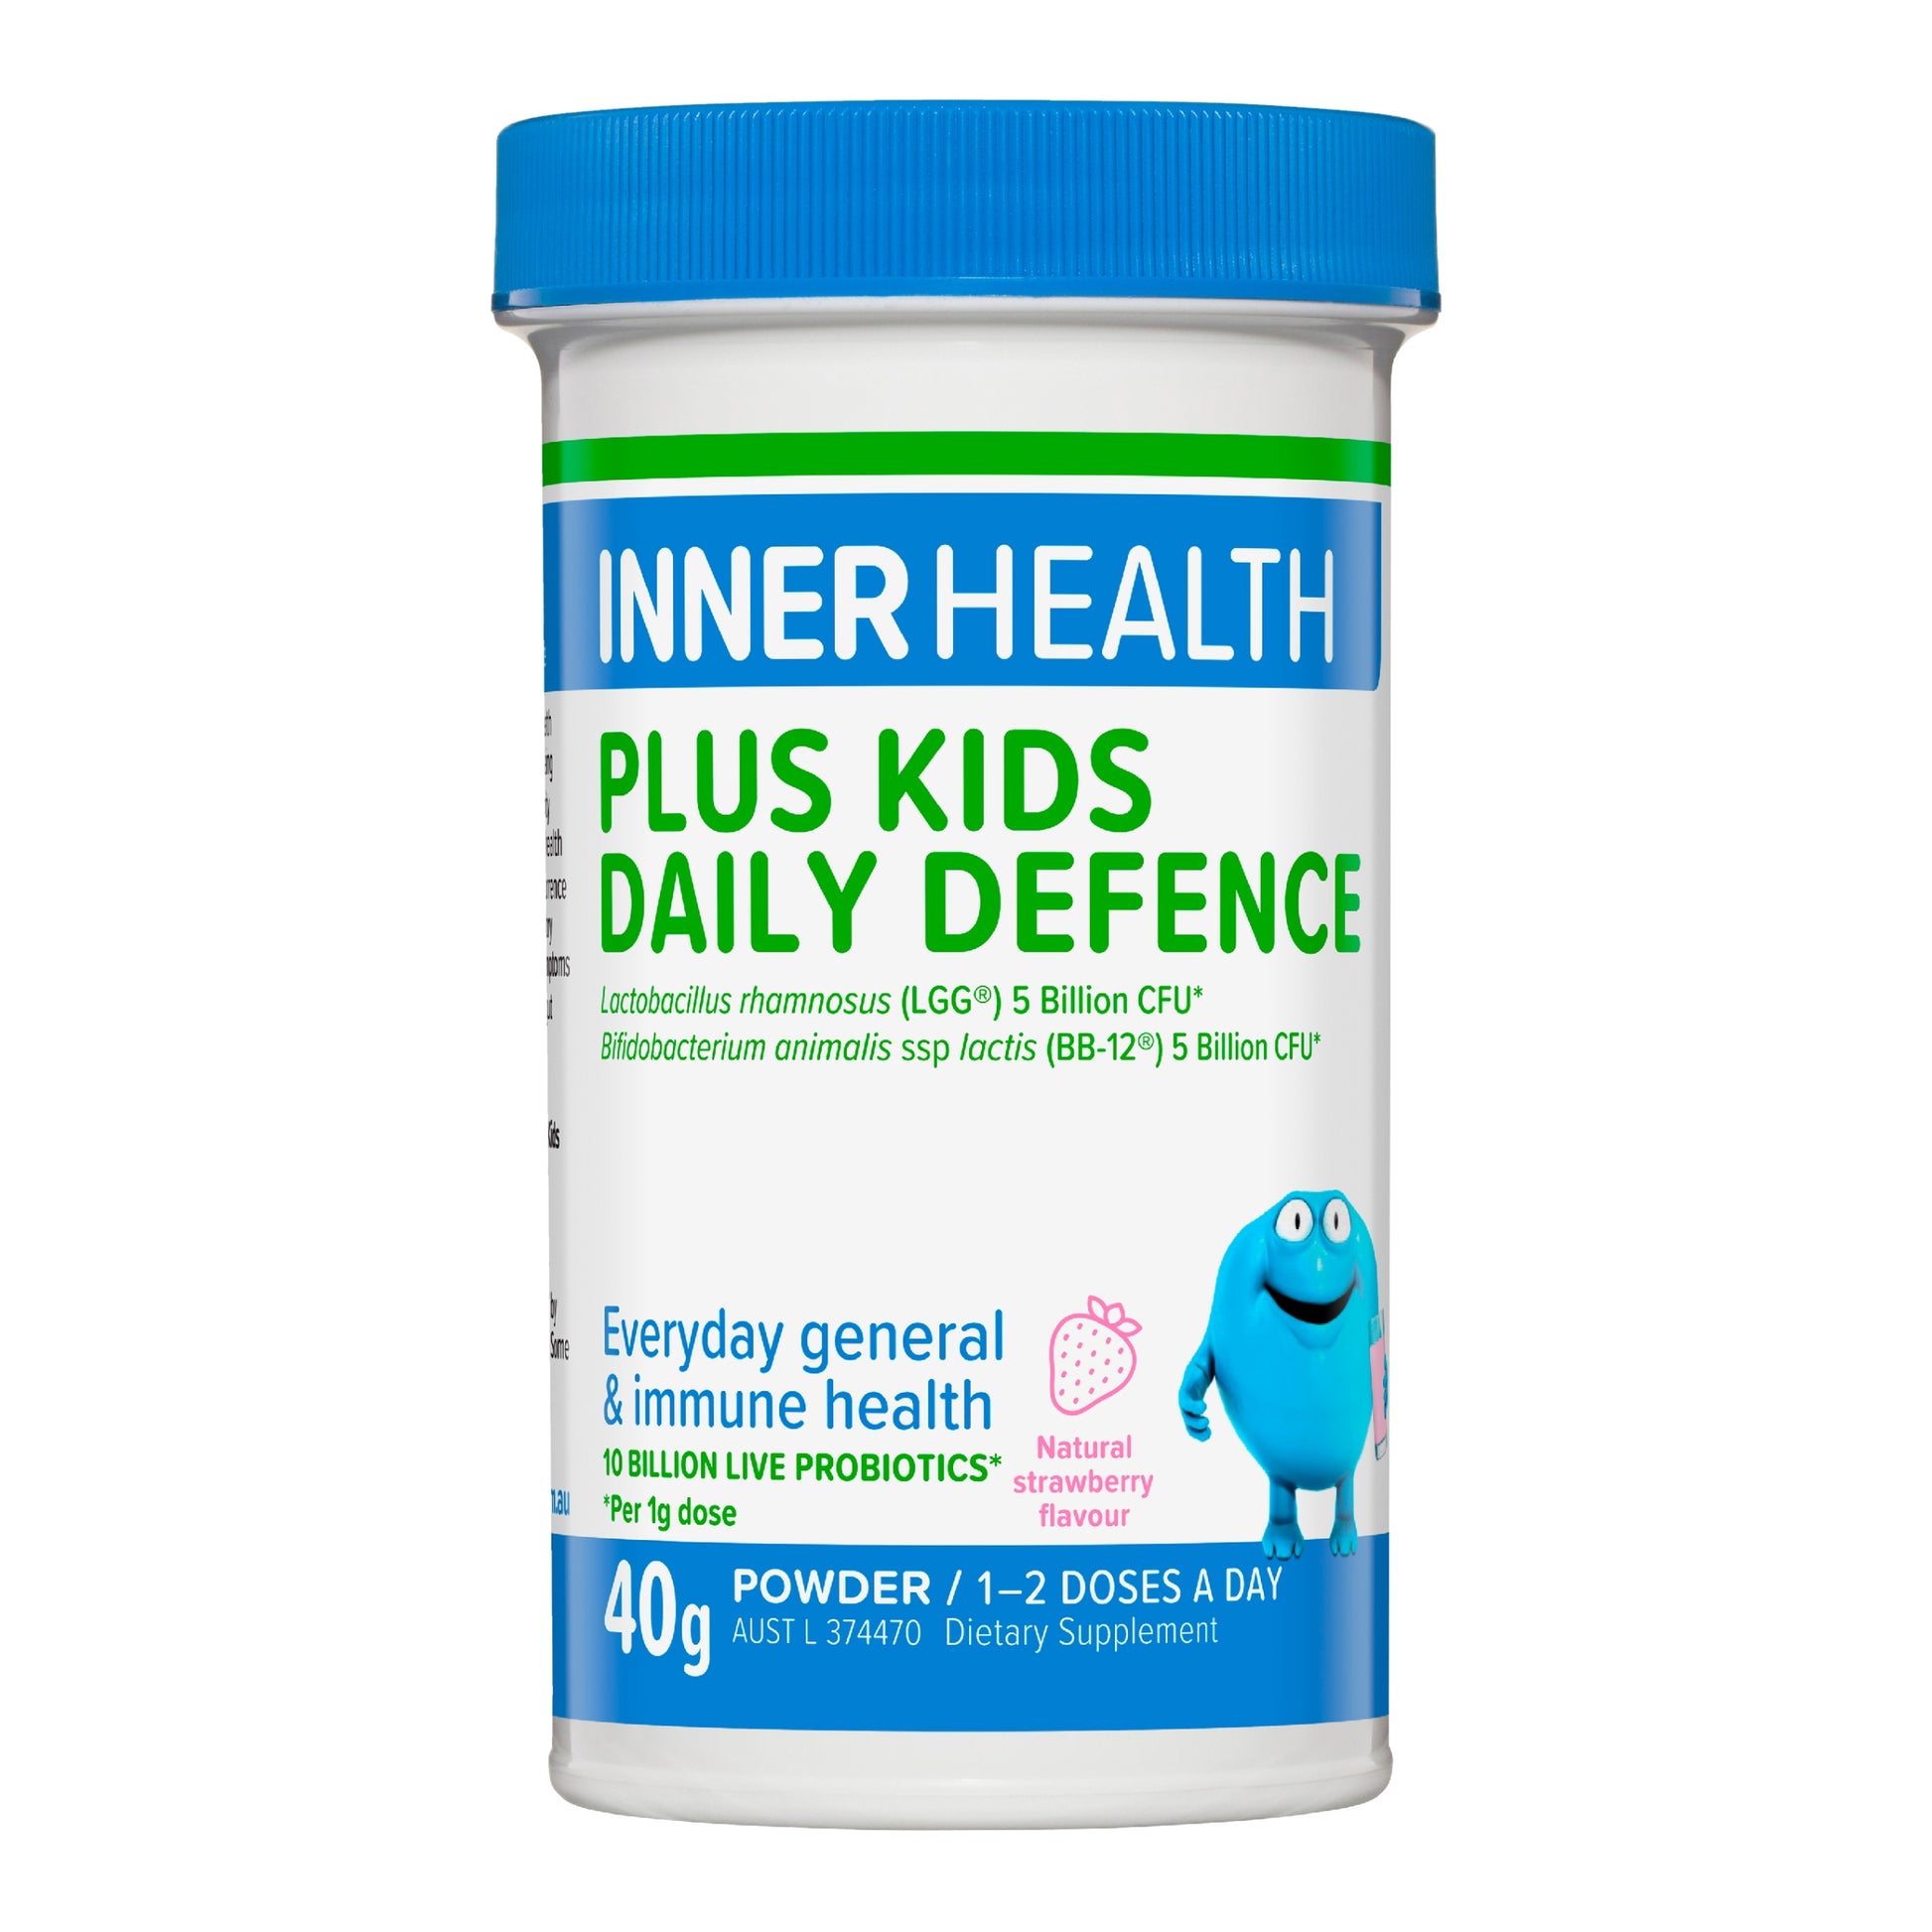 Inner Health Plus Kids Daily Defence Probiotic 40g Powder